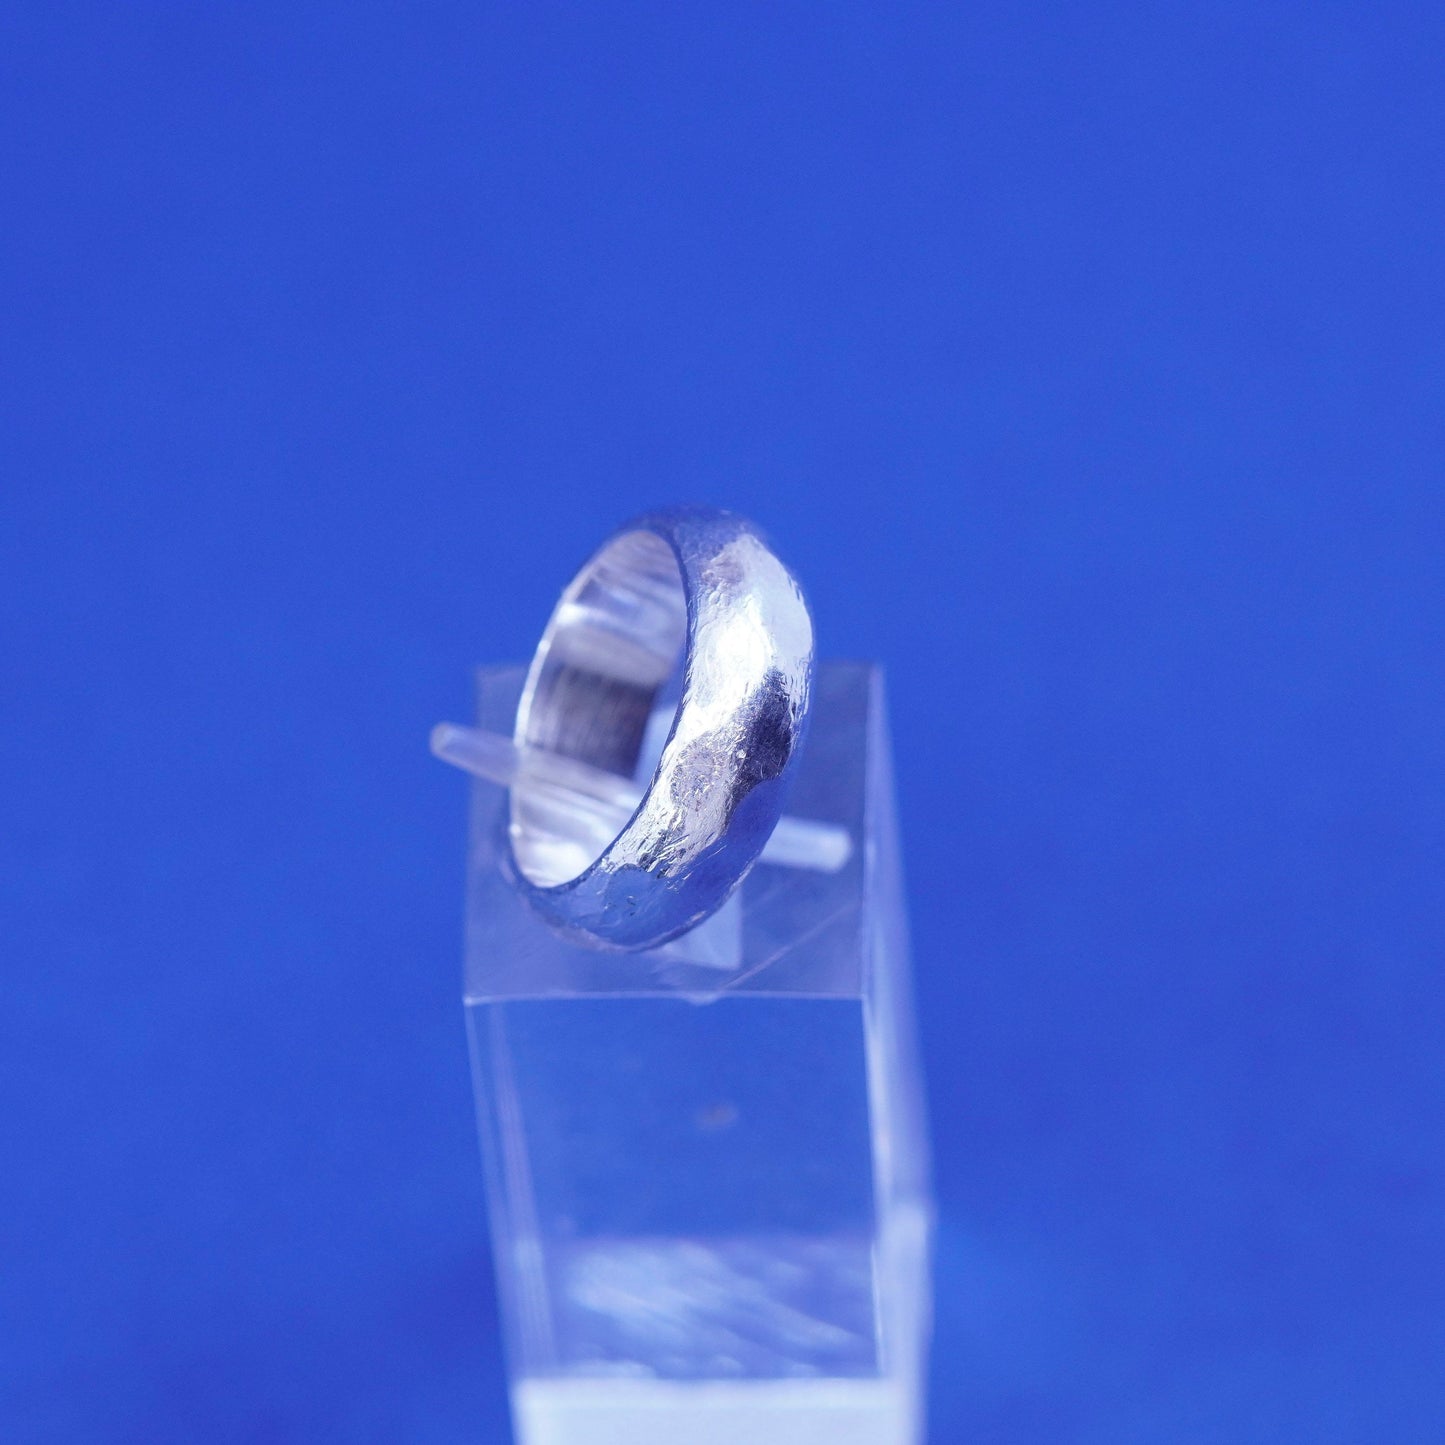 Size 4.75, vintage Sterling silver handmade ring, hammered 925 wedding band